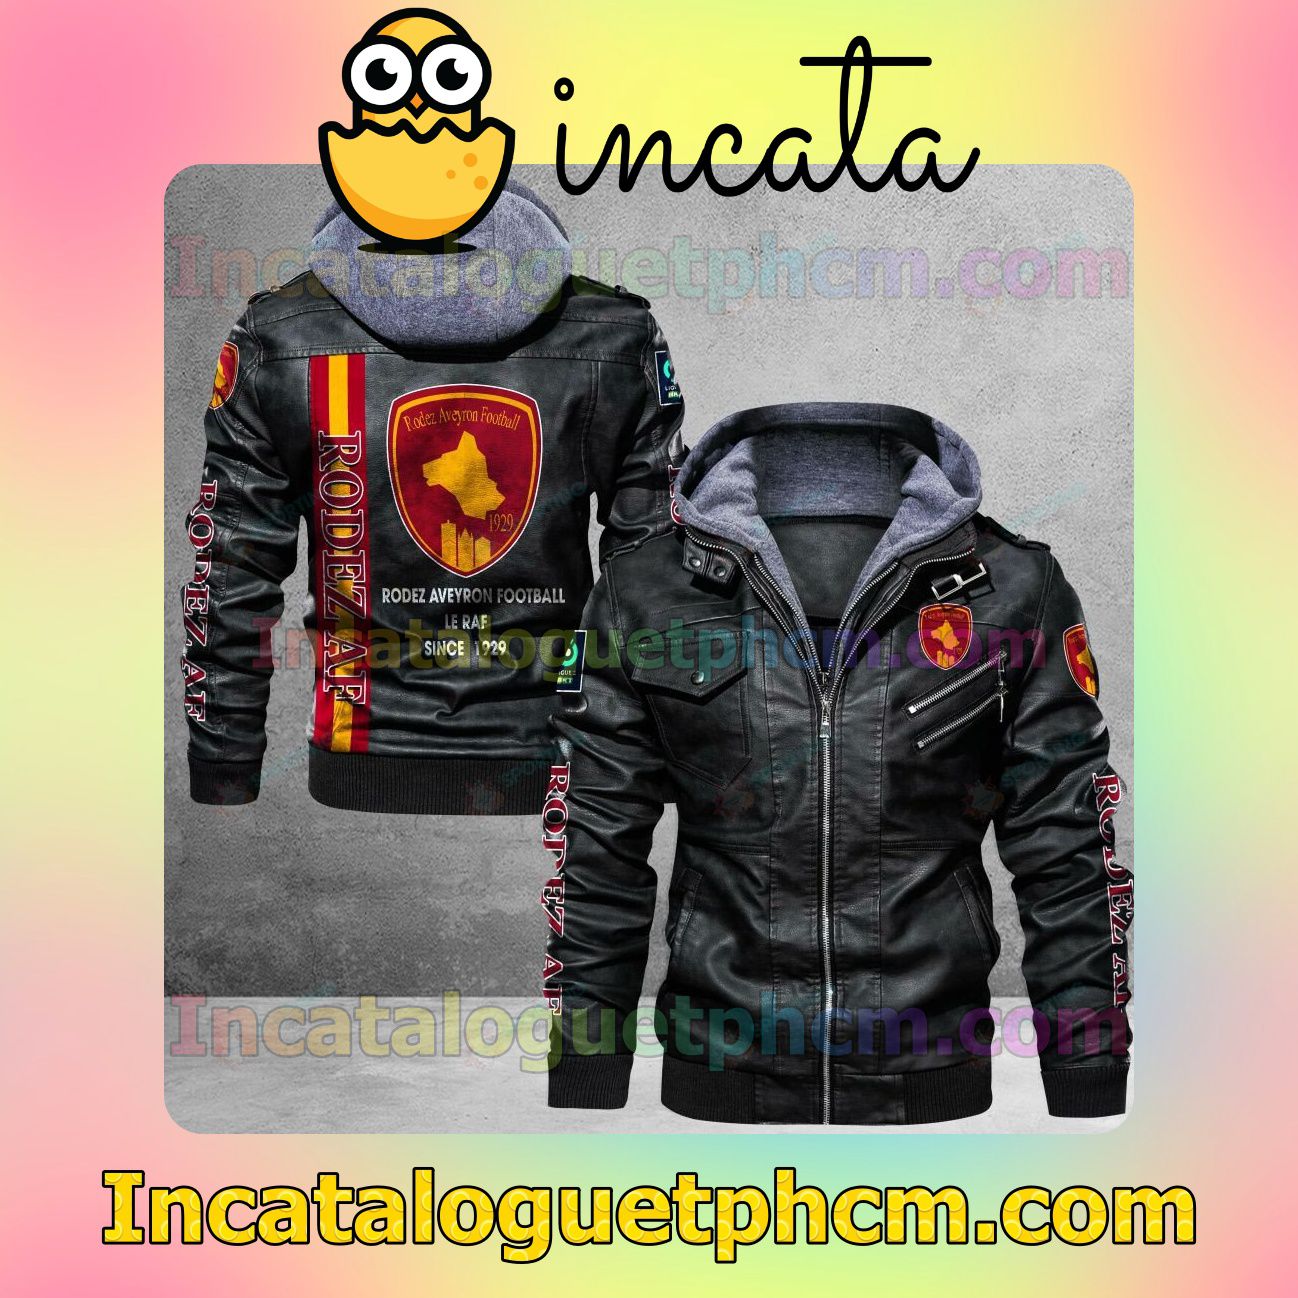 Rodez Aveyron Football Brand Uniform Leather Jacket